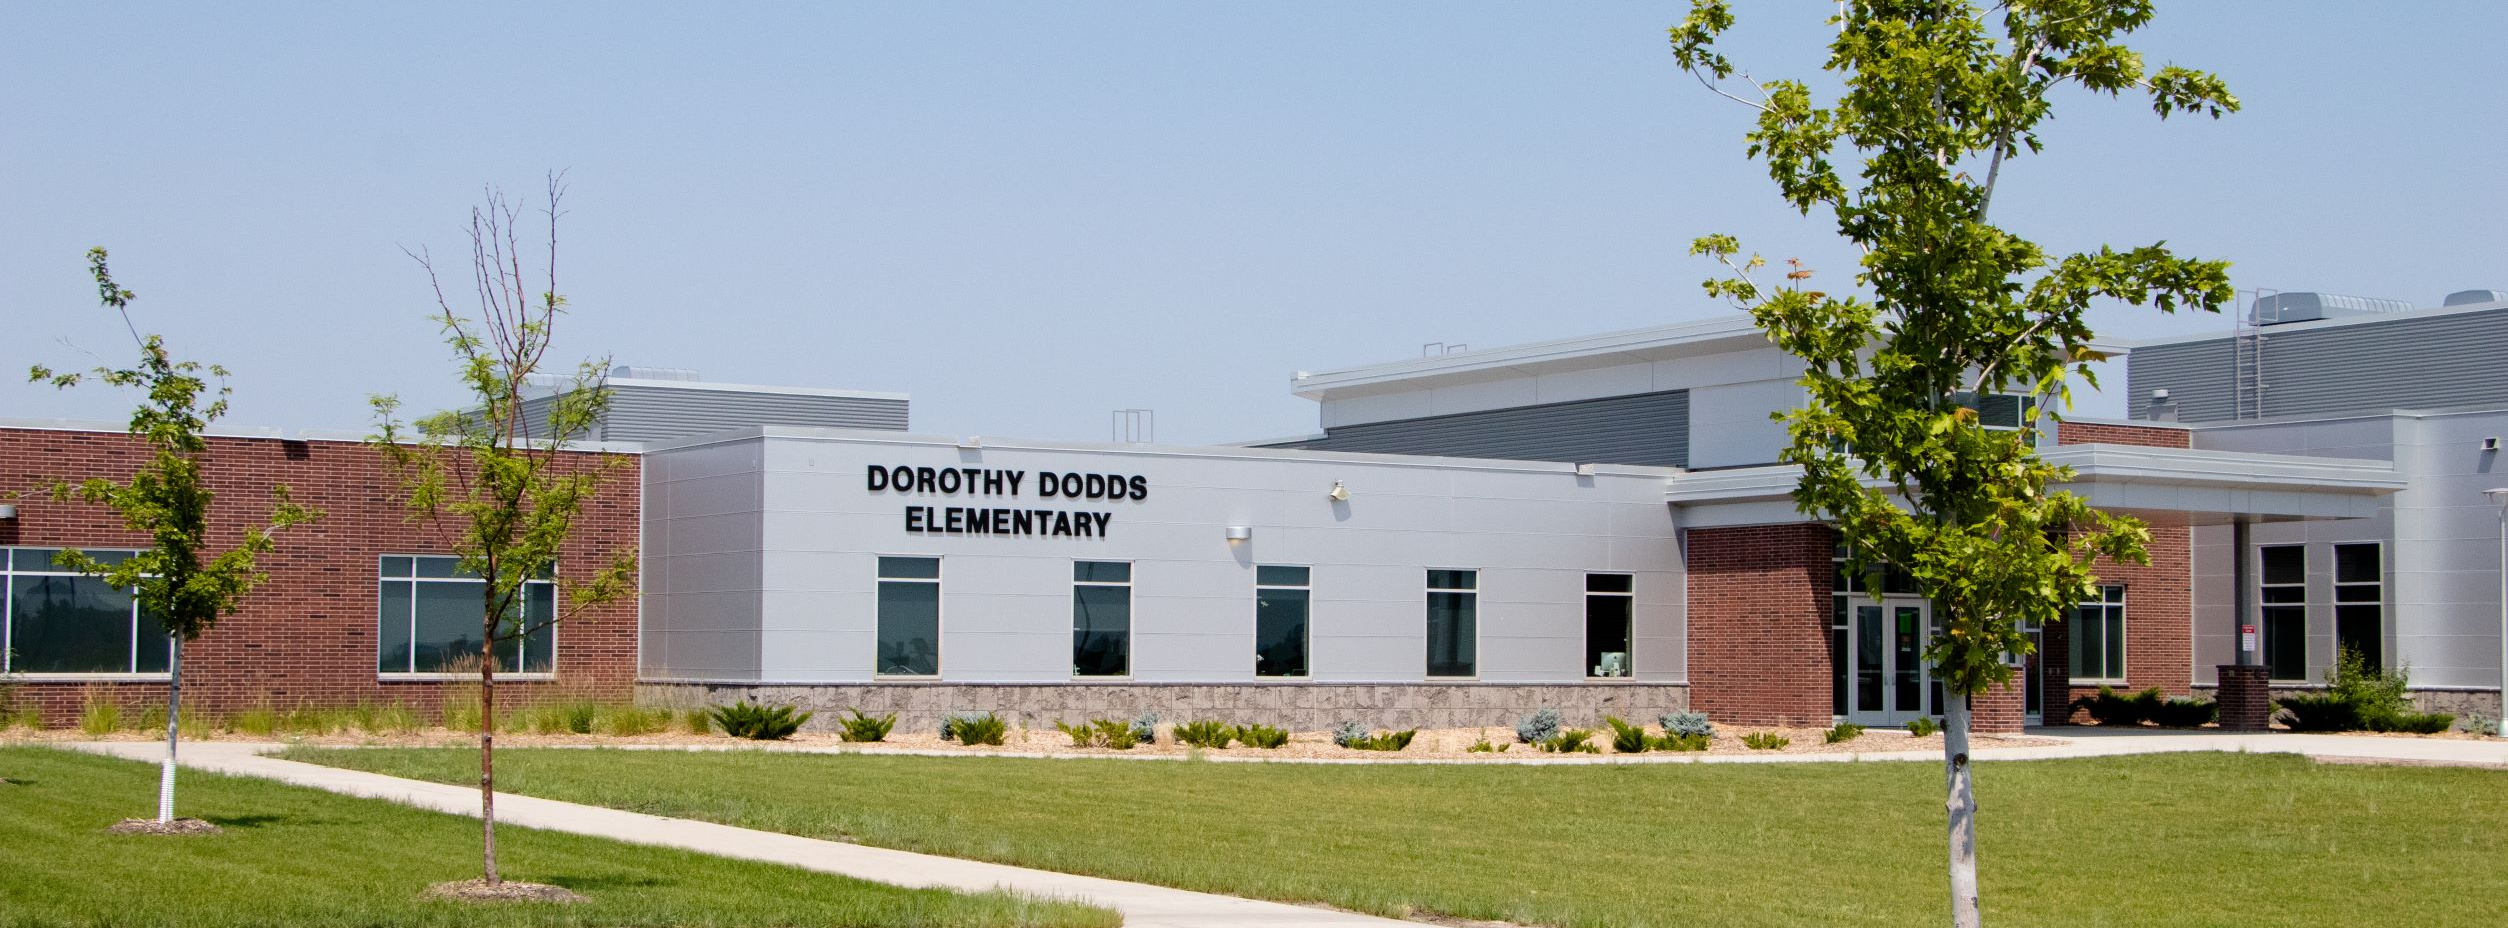 Dorothy Dodds Elementary